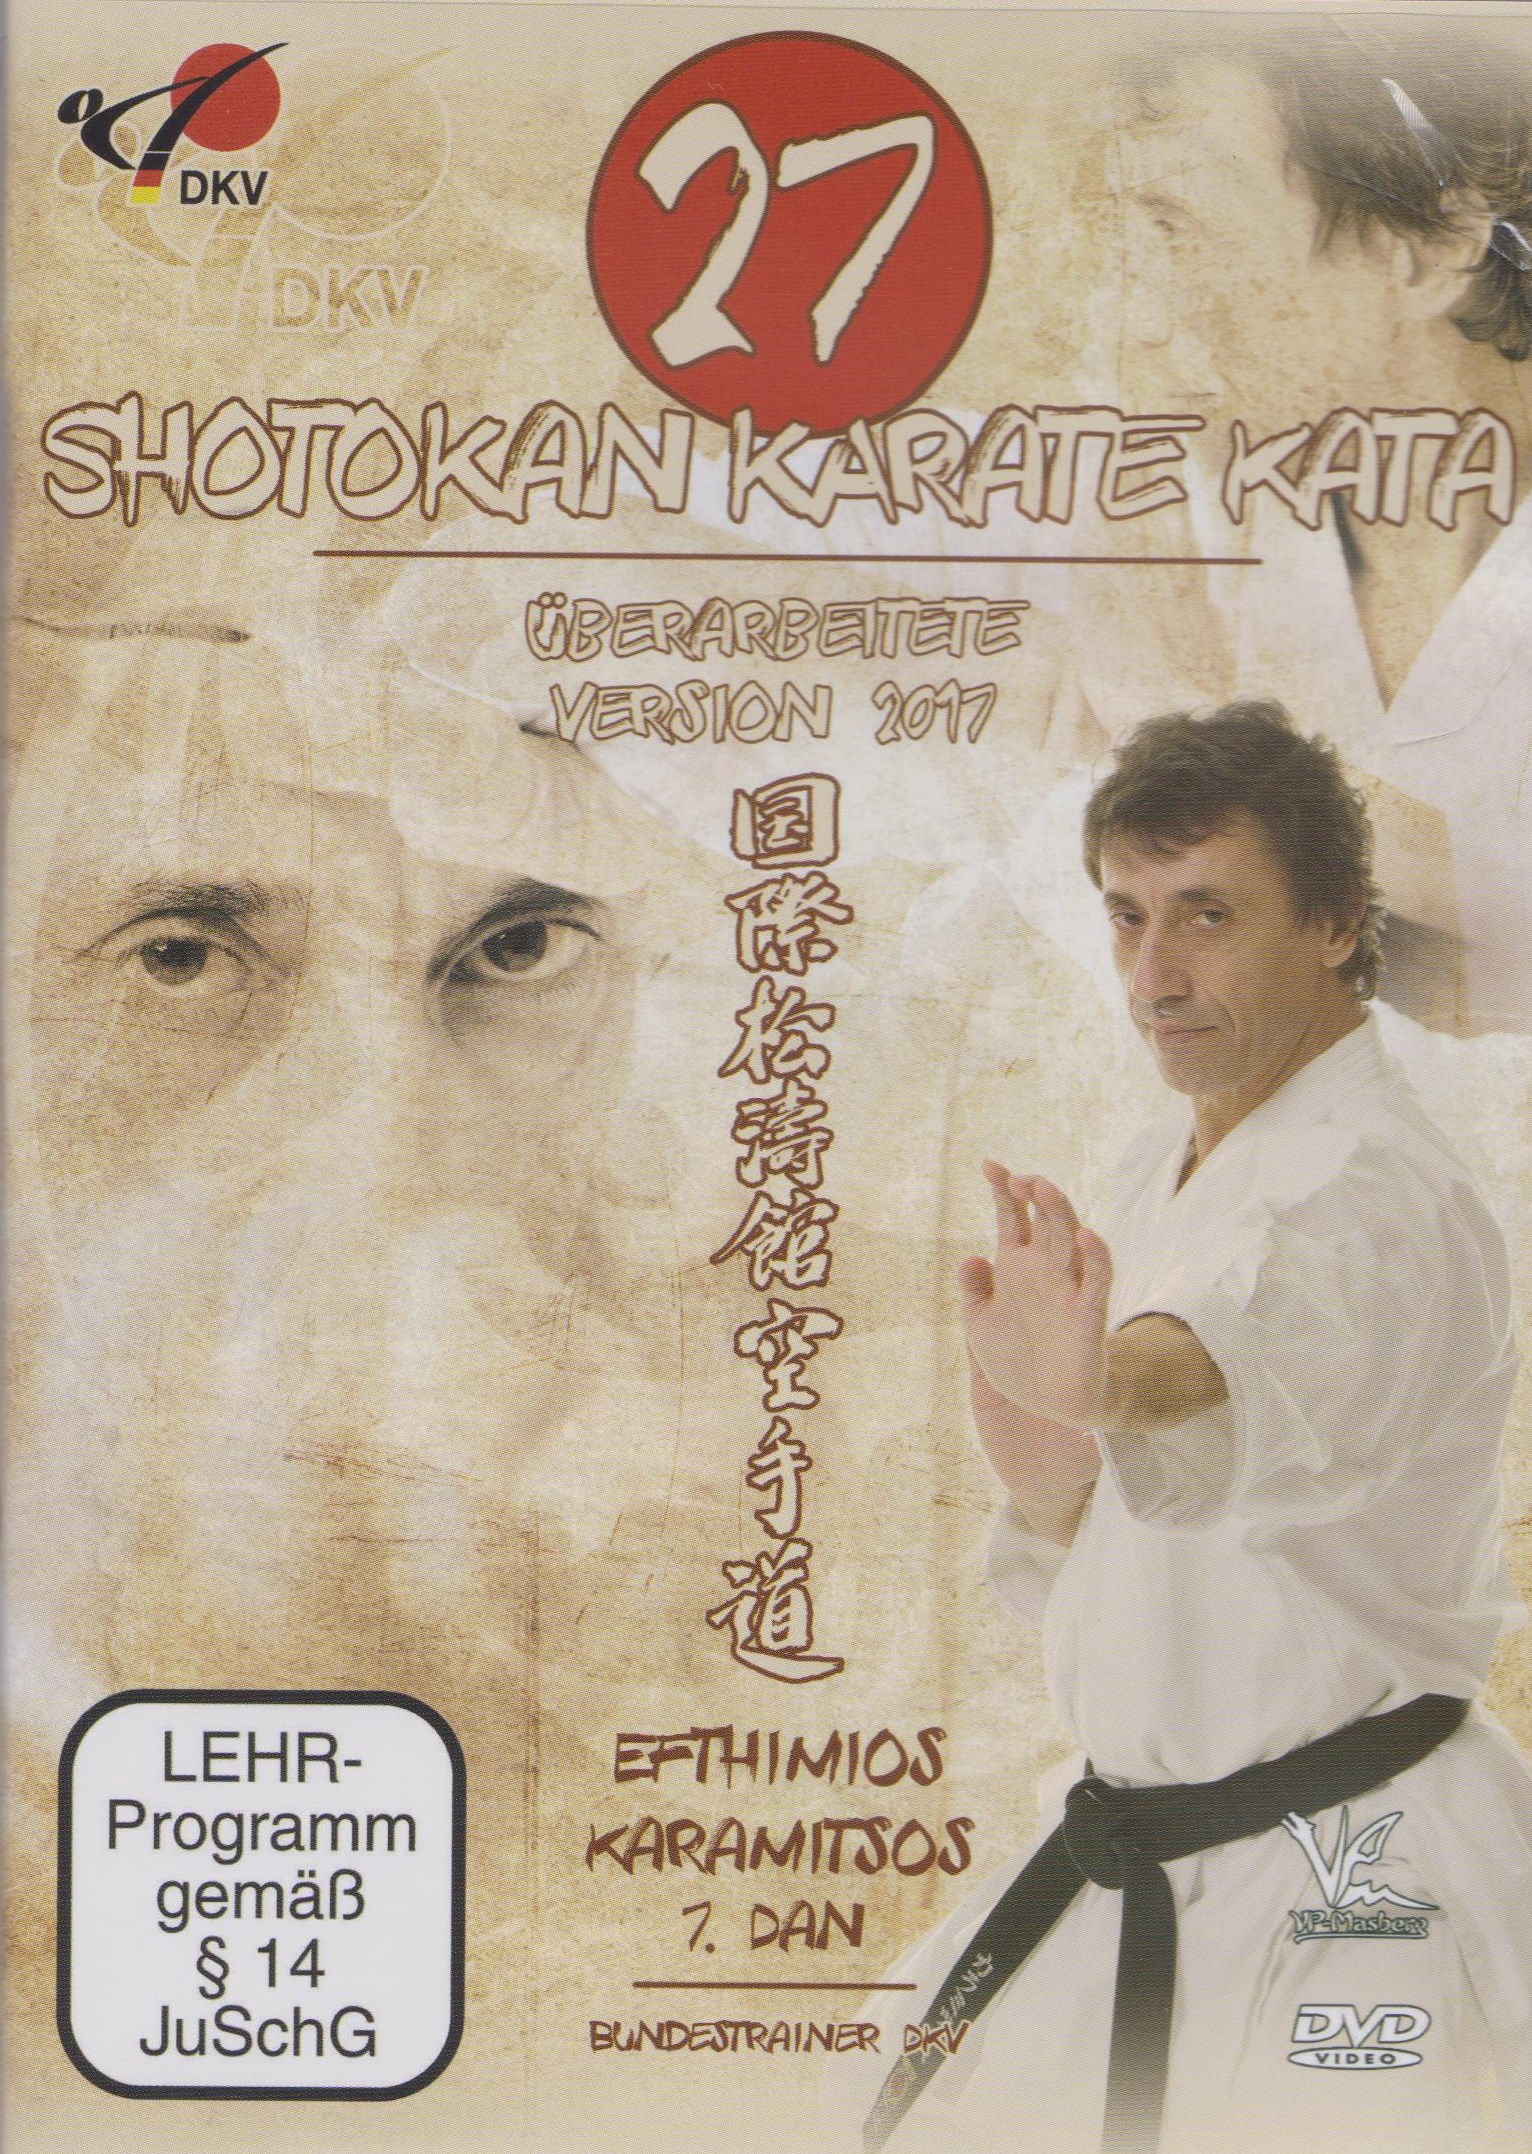 DVD 27 Shotokan Karate Kata - DKV